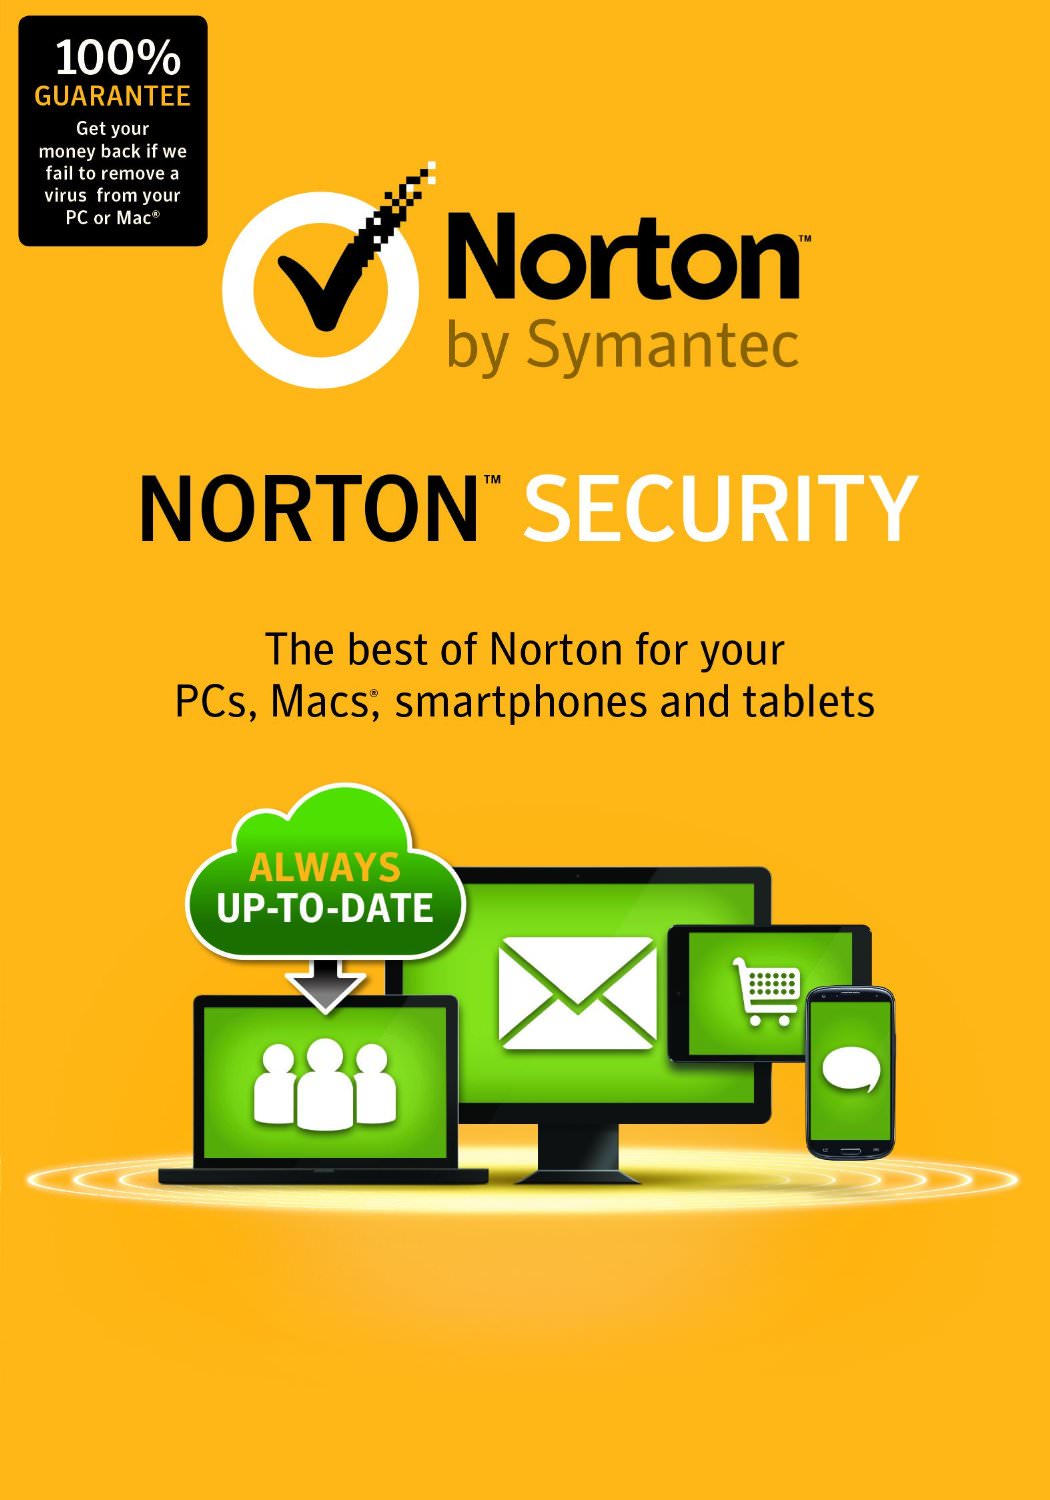 Norton antivirus free trial